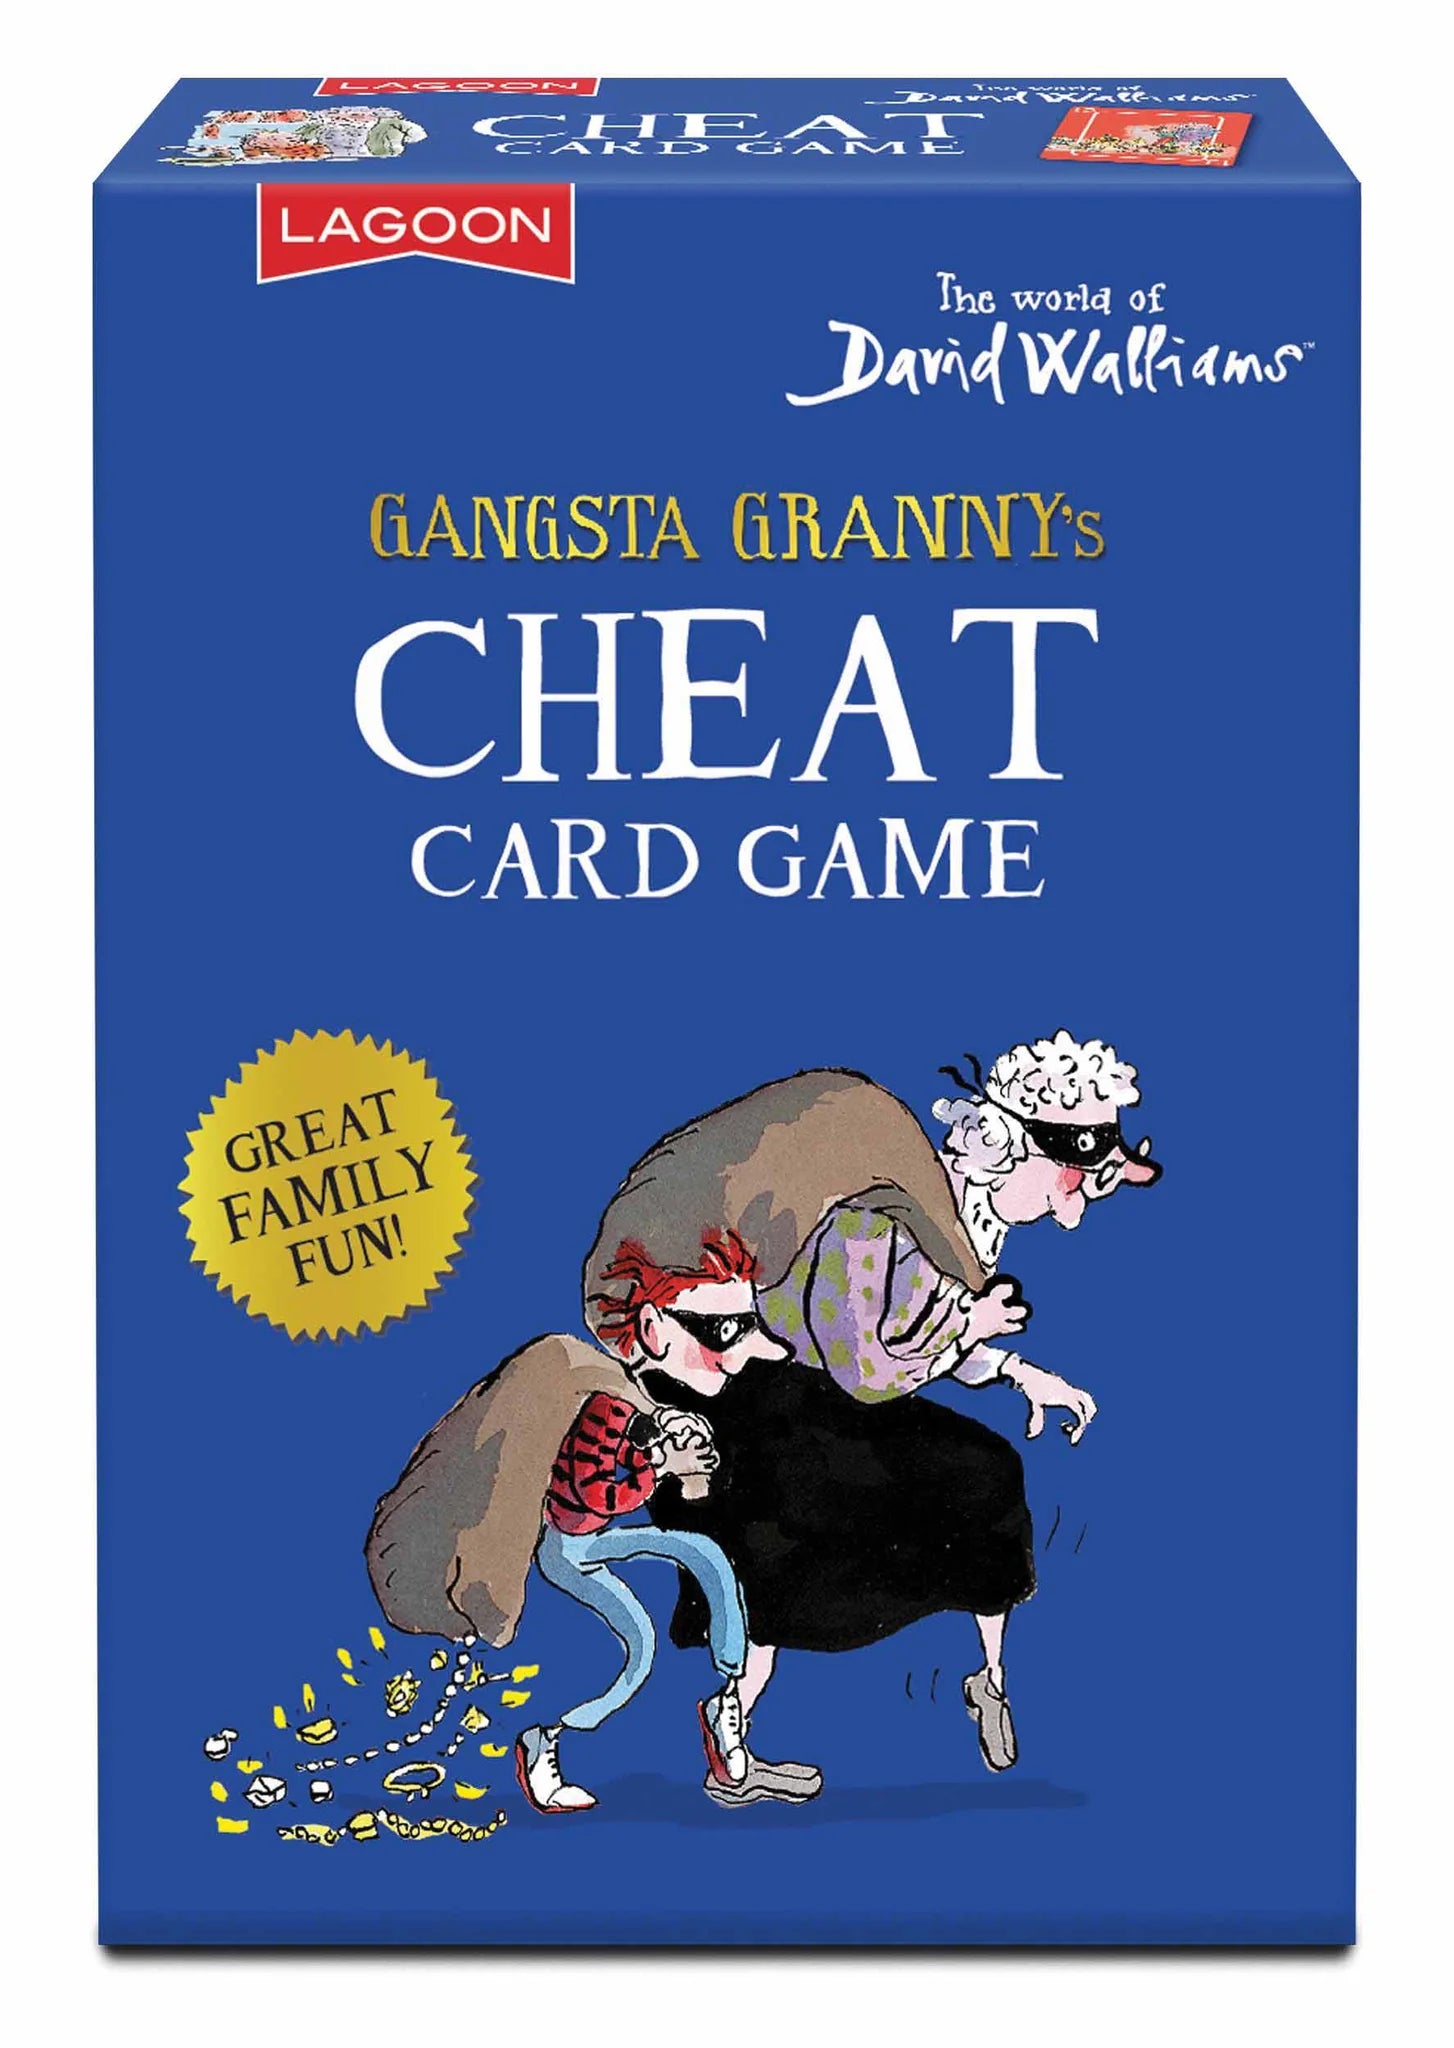 David Walliams Gangsta Granny's Cheat Card Game